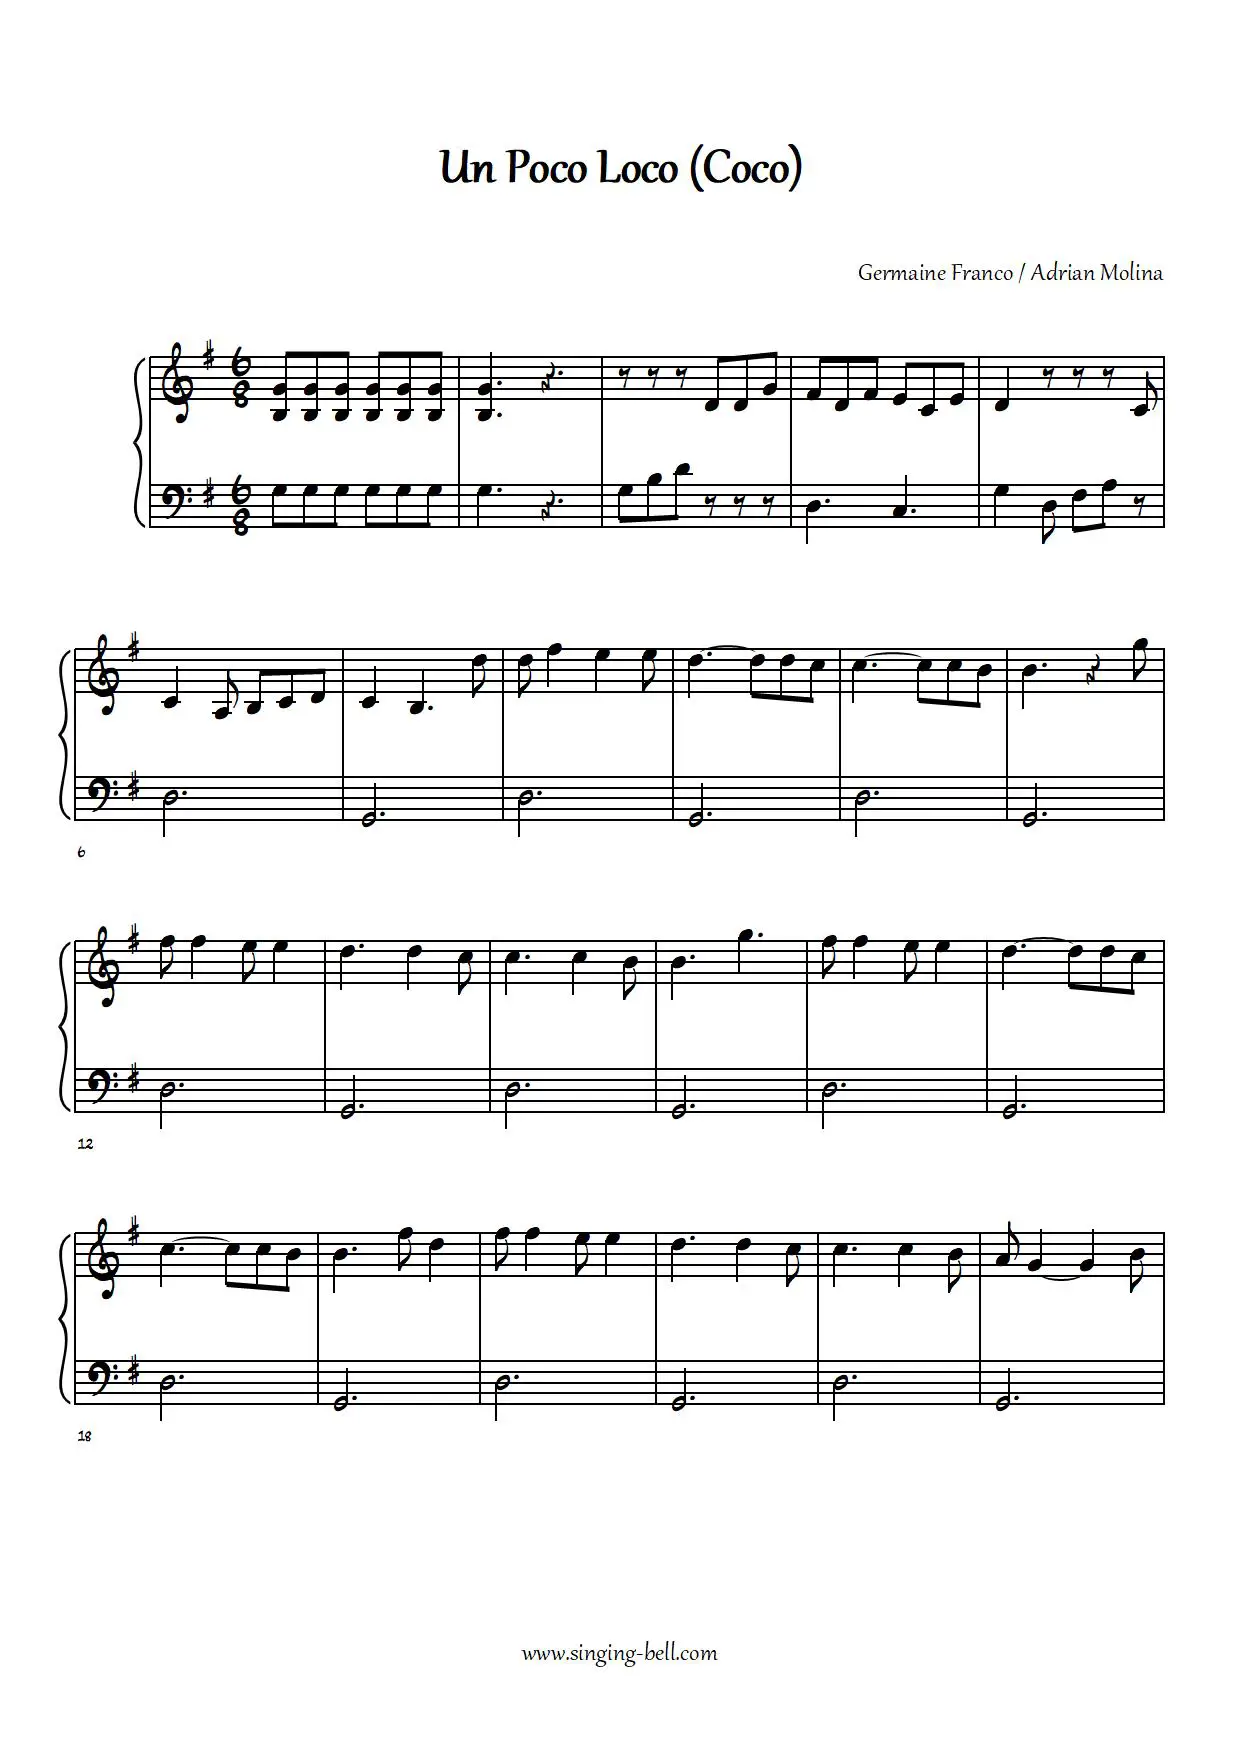 Poco Loco easy piano sheet p.1 music notes beginners pdf